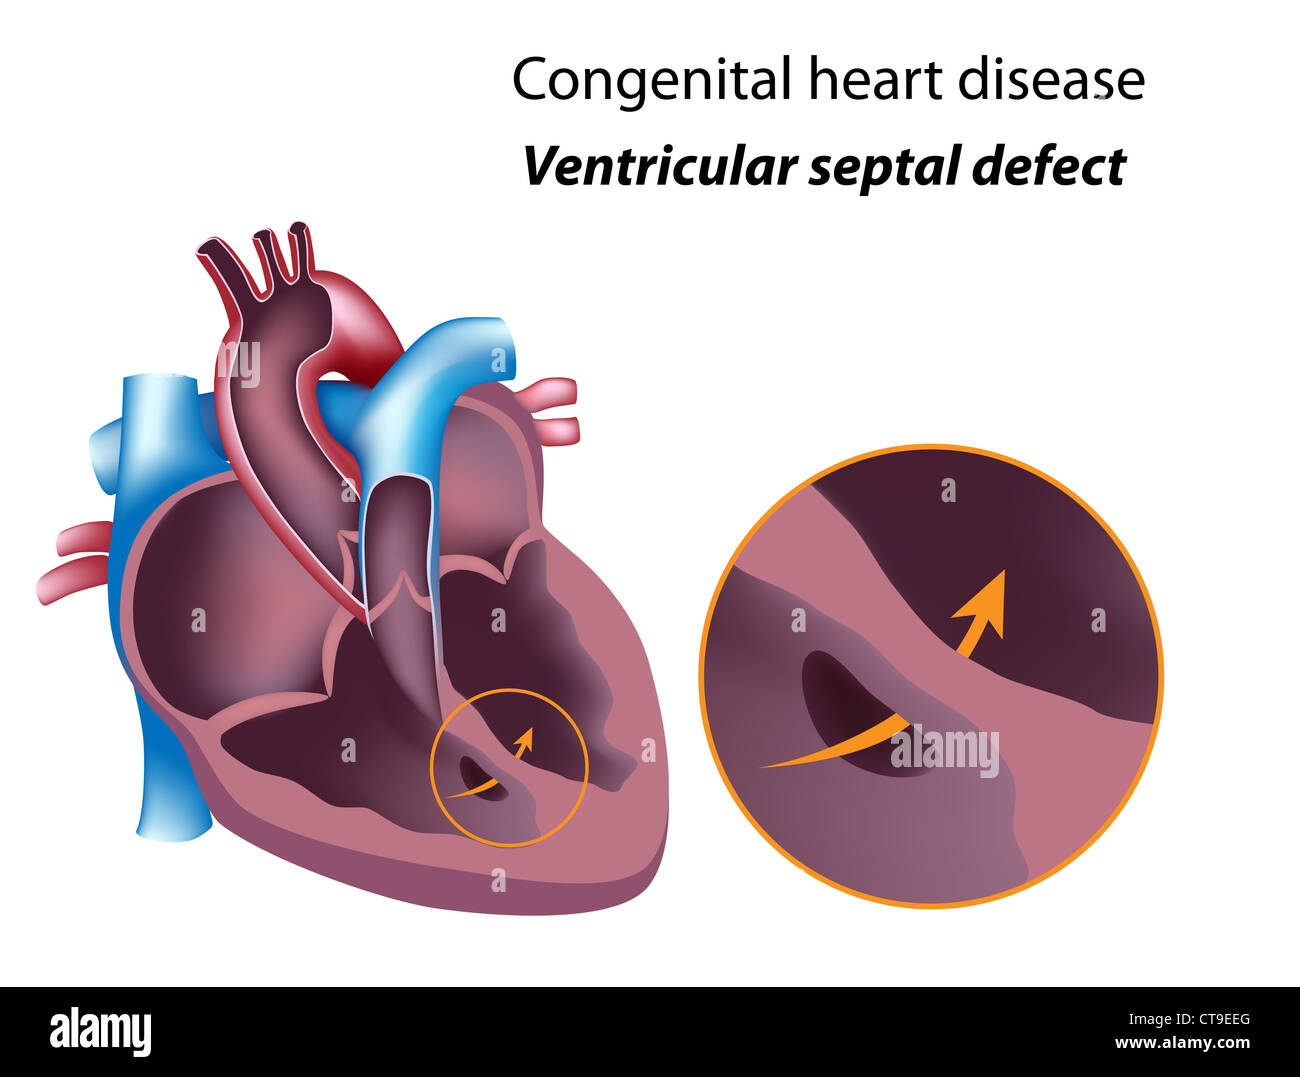 Congenital heart disease: ventricular septal defect Stock Photo